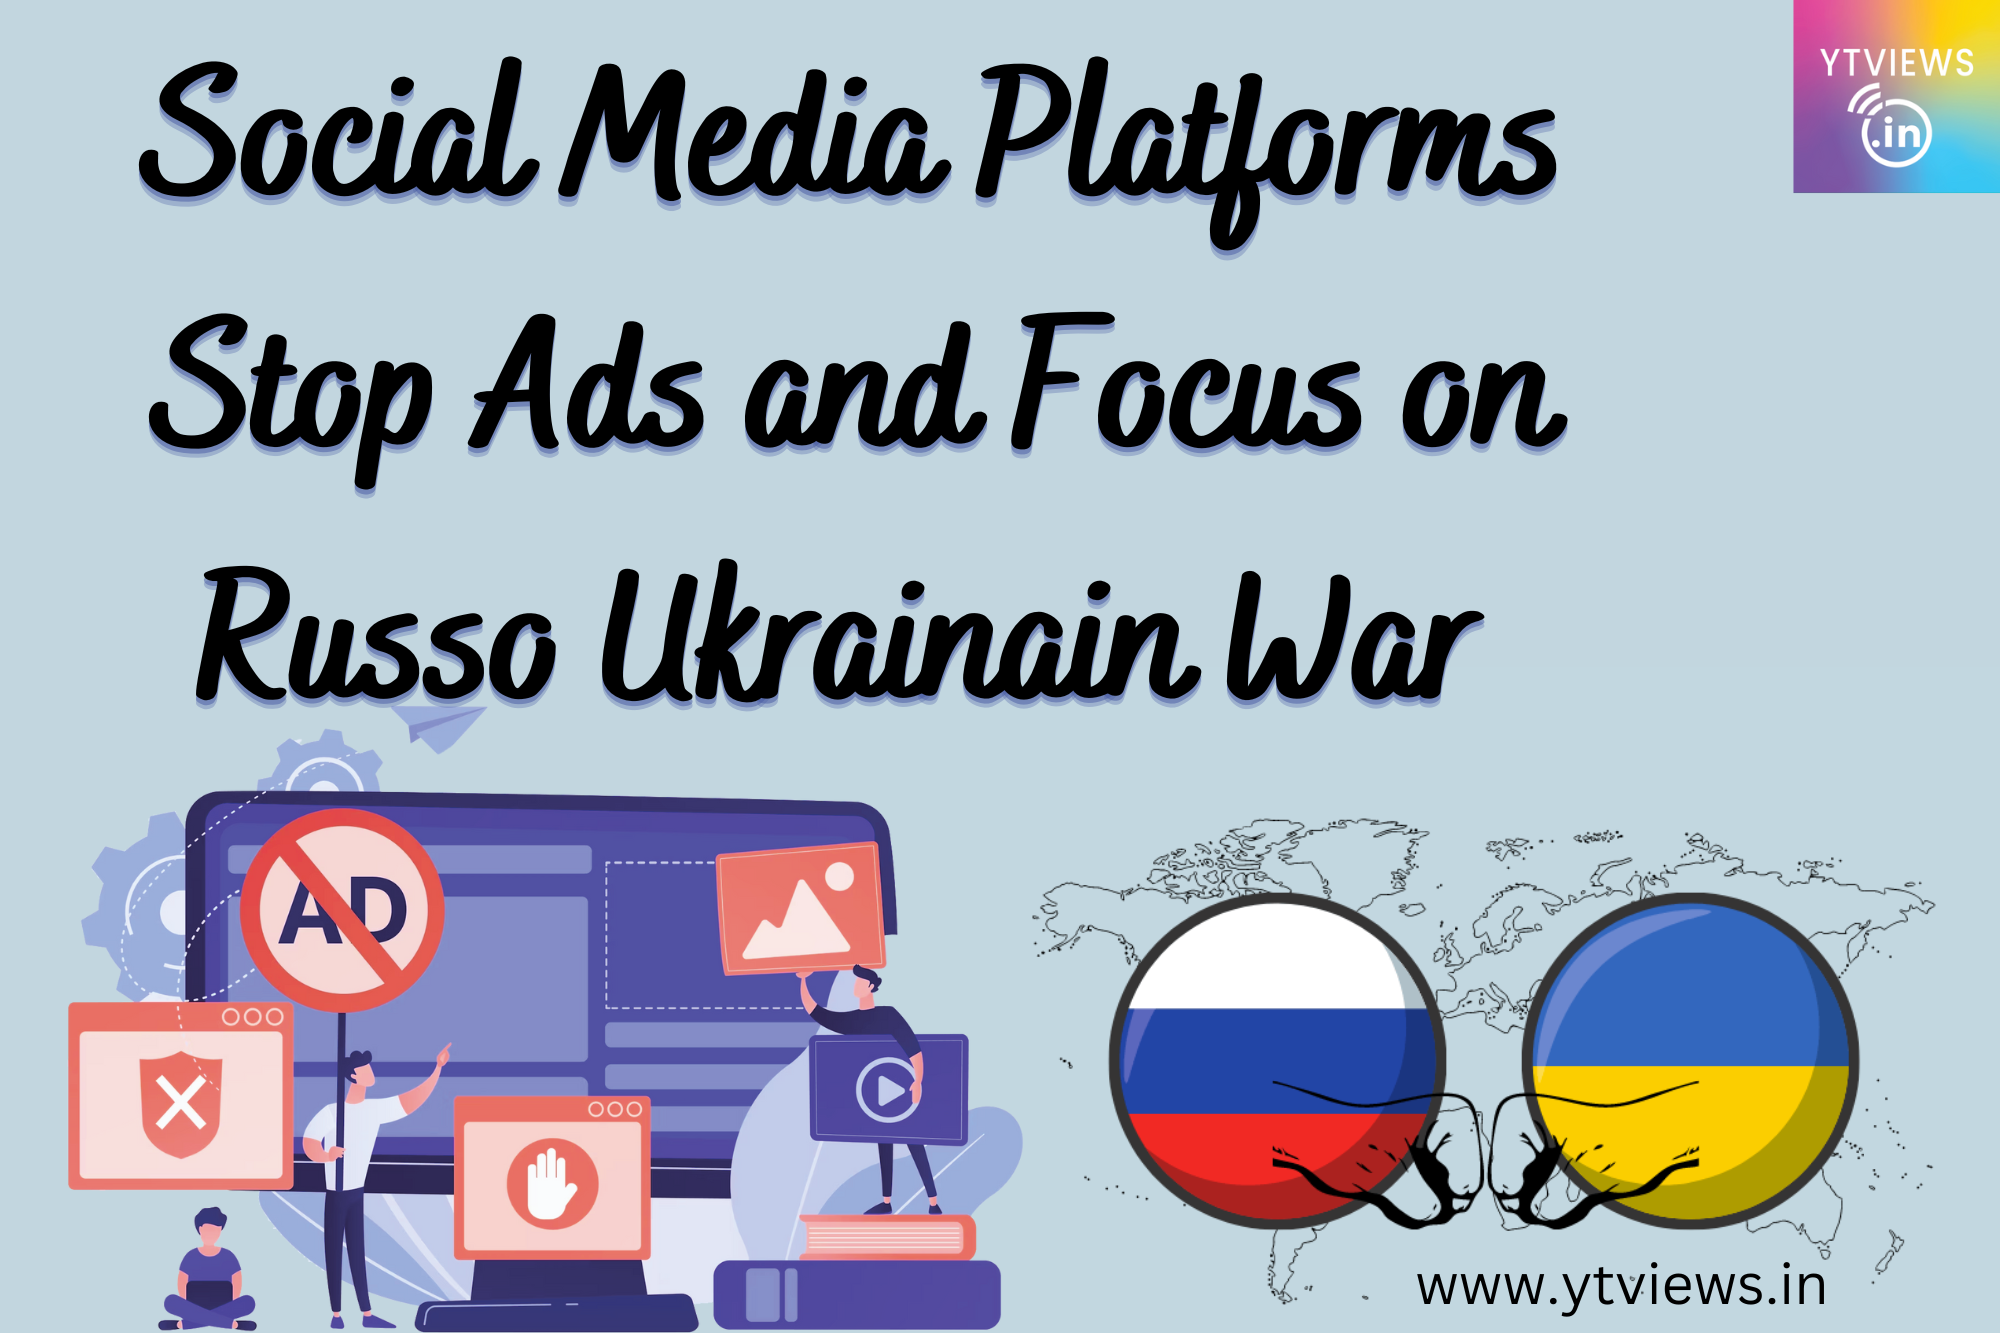 Social Media Platforms stop ads and focus on Russo Ukrainian war